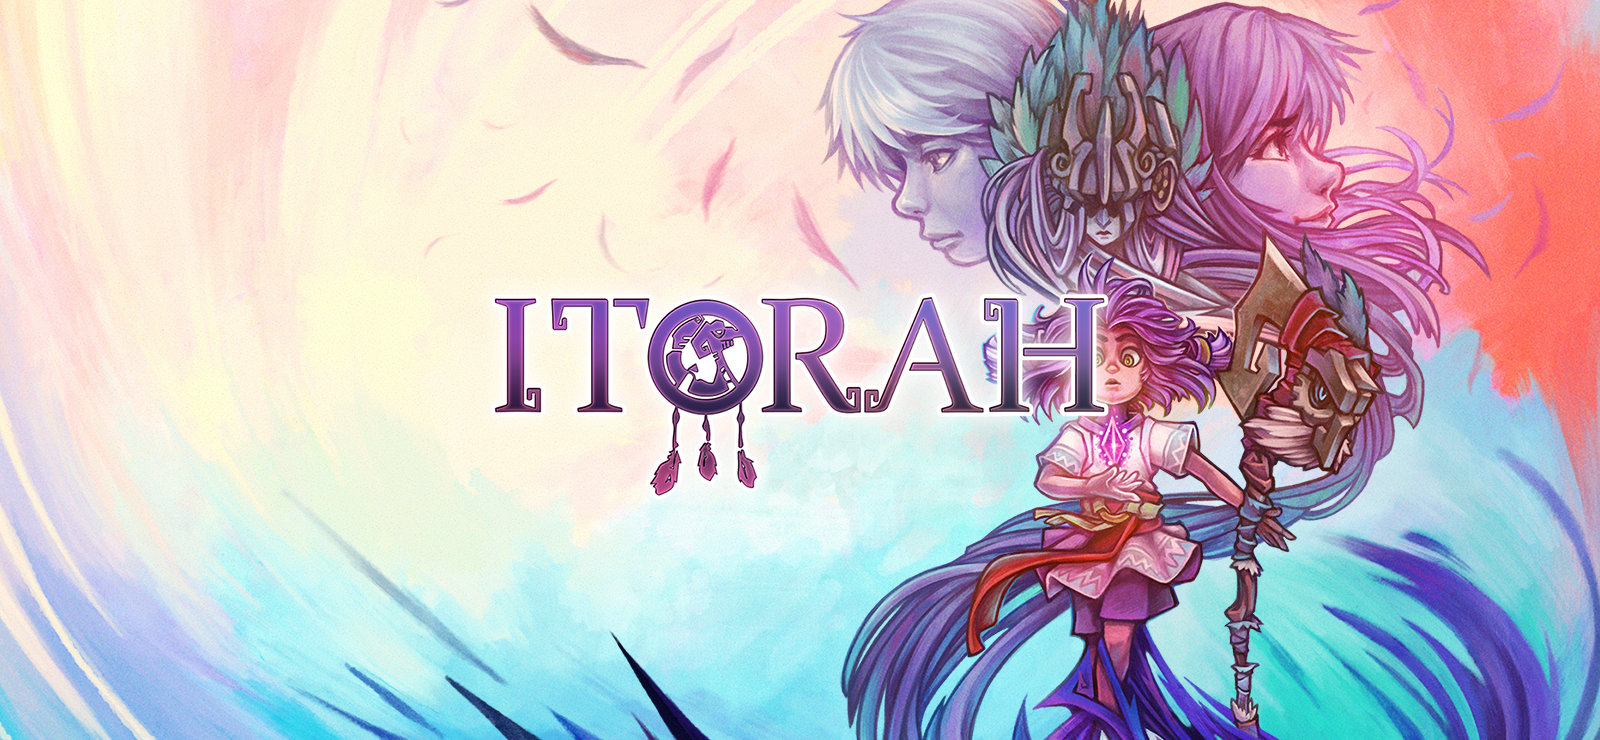 ITORAH Save The World Edition